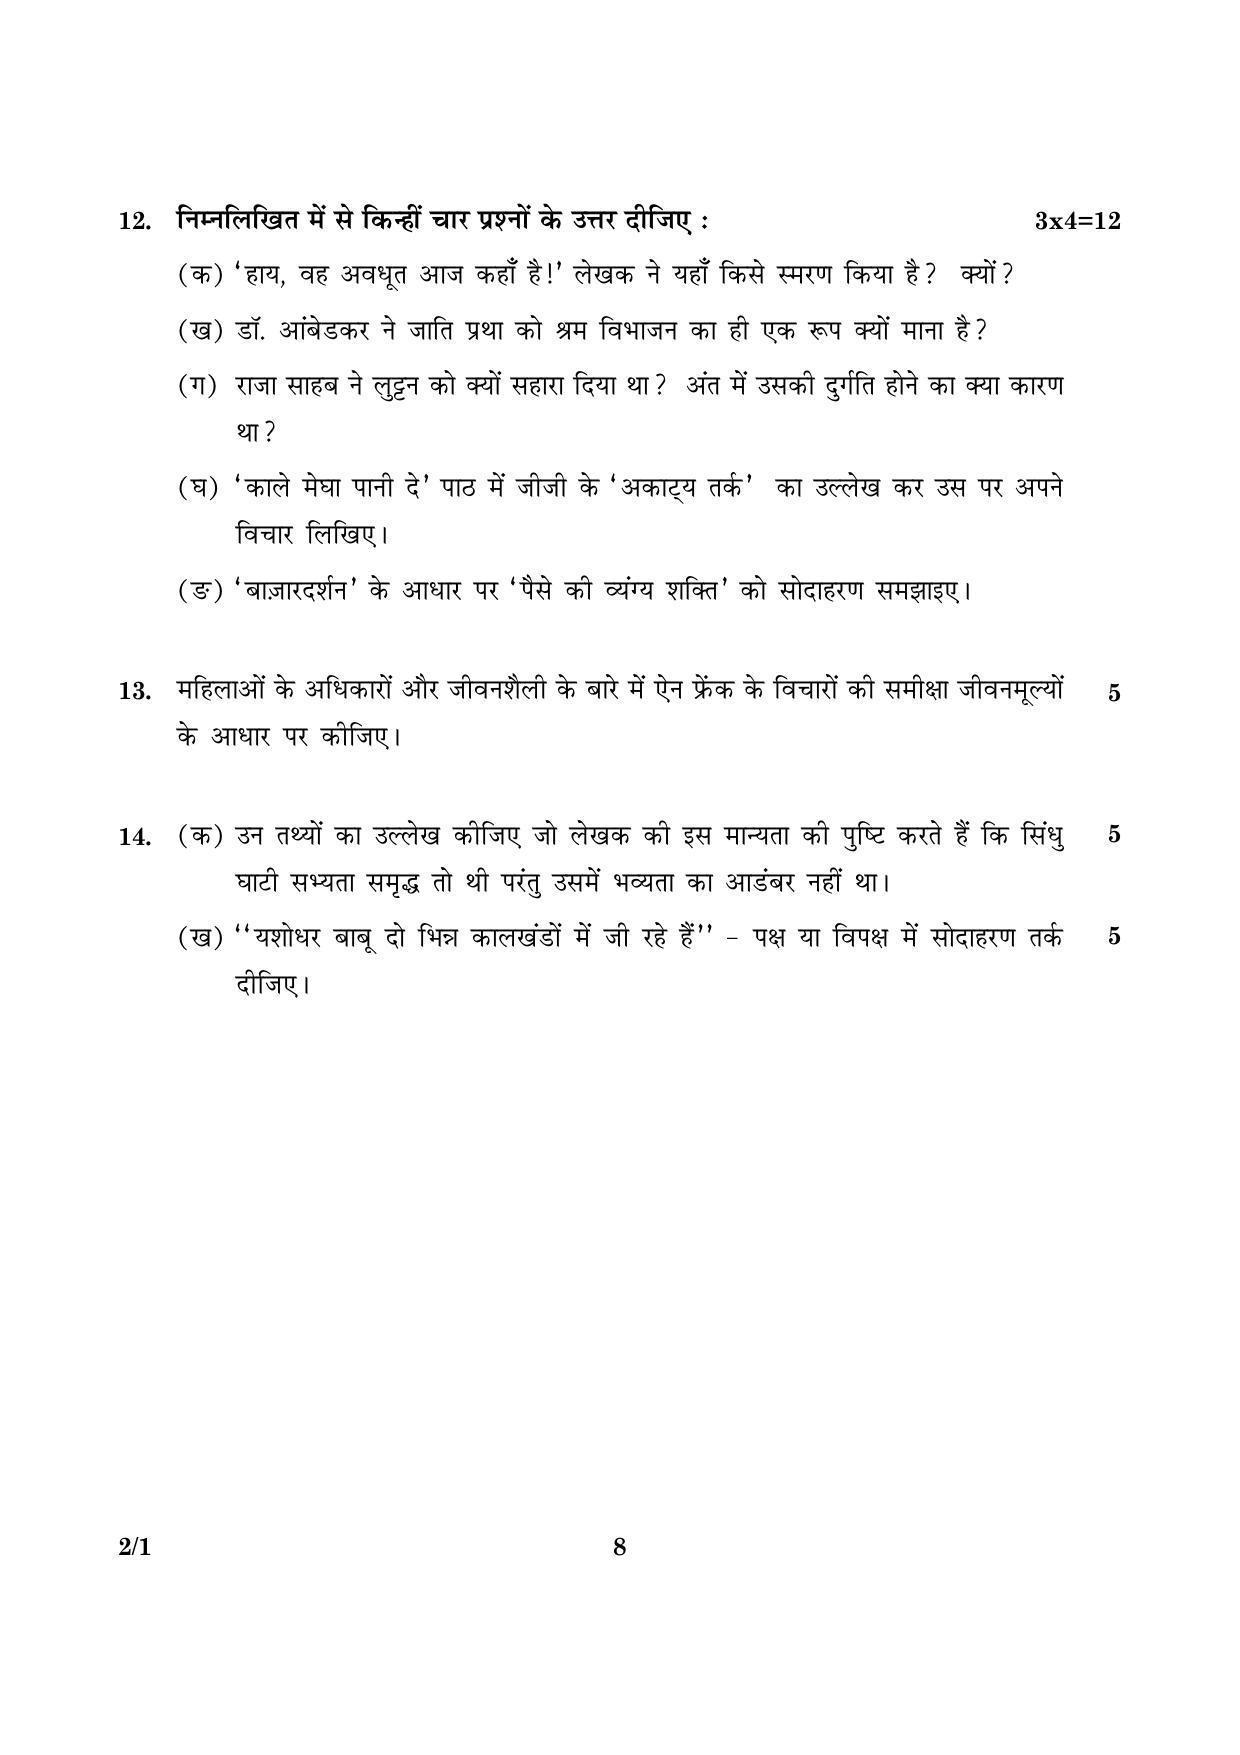 CBSE Class 12 002 Set 1 Hindi (Core) 2016 Question Paper - Page 8